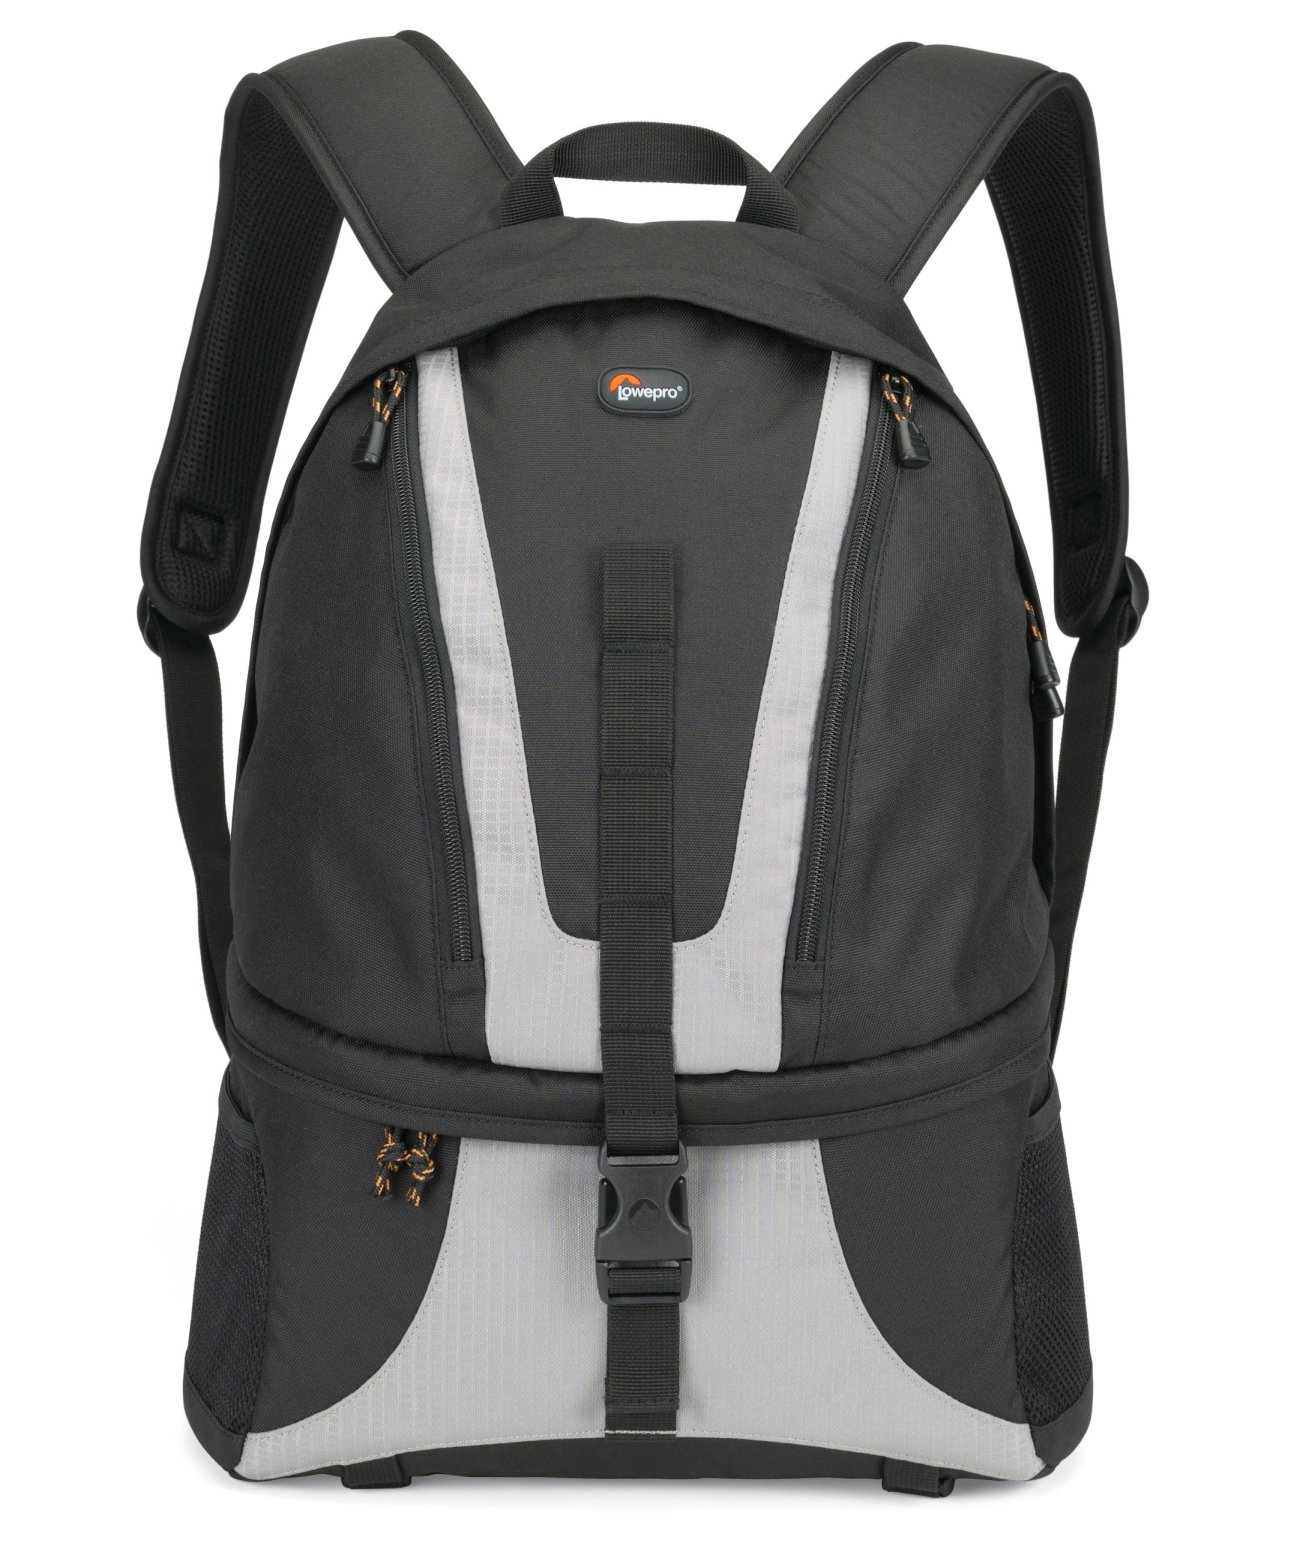 LowePro Orion DayPack 200 Camera Backpack(Black)-LP36329 | Buy Camera Bags Online In India